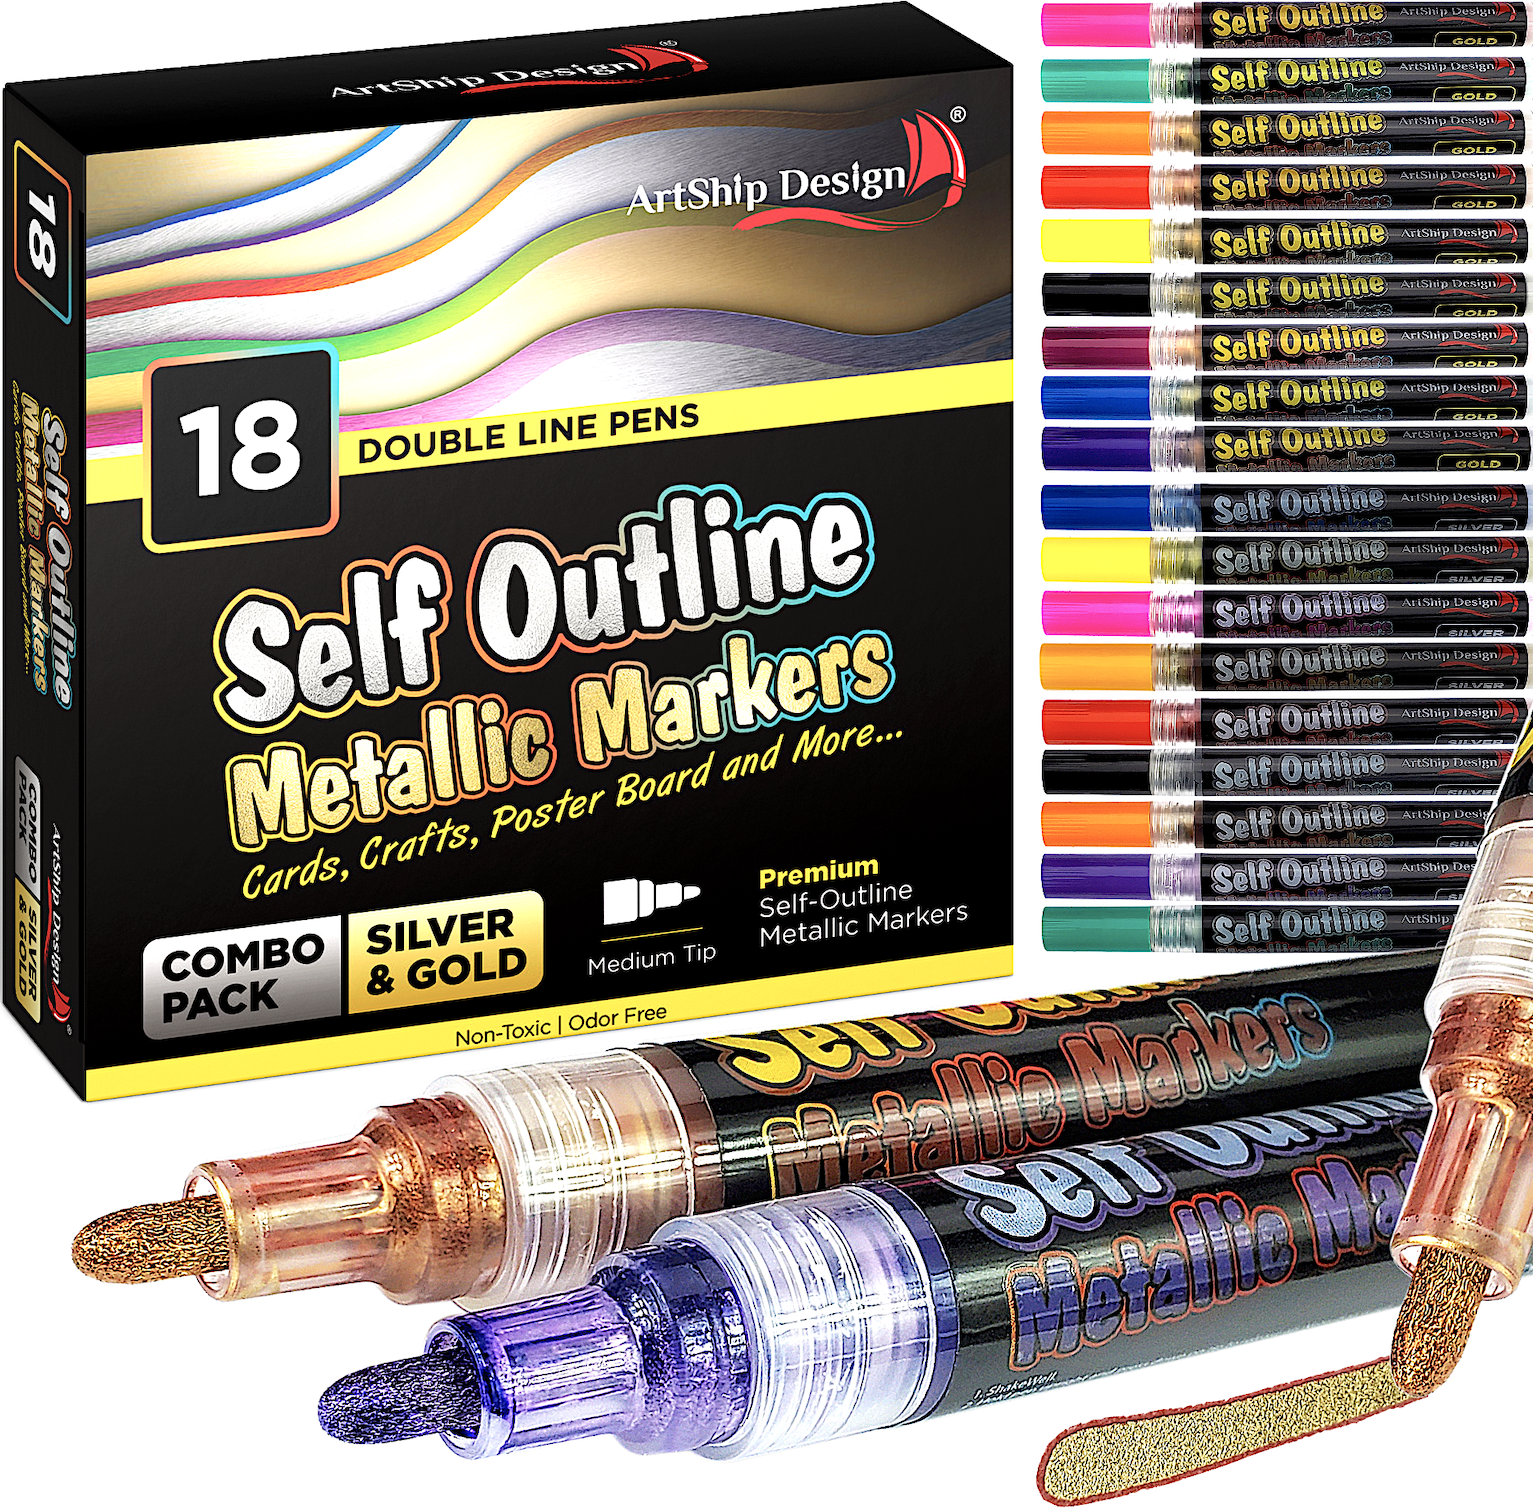 8 Colors Metallic Double Lines Art Markers Out Line Pen - Temu